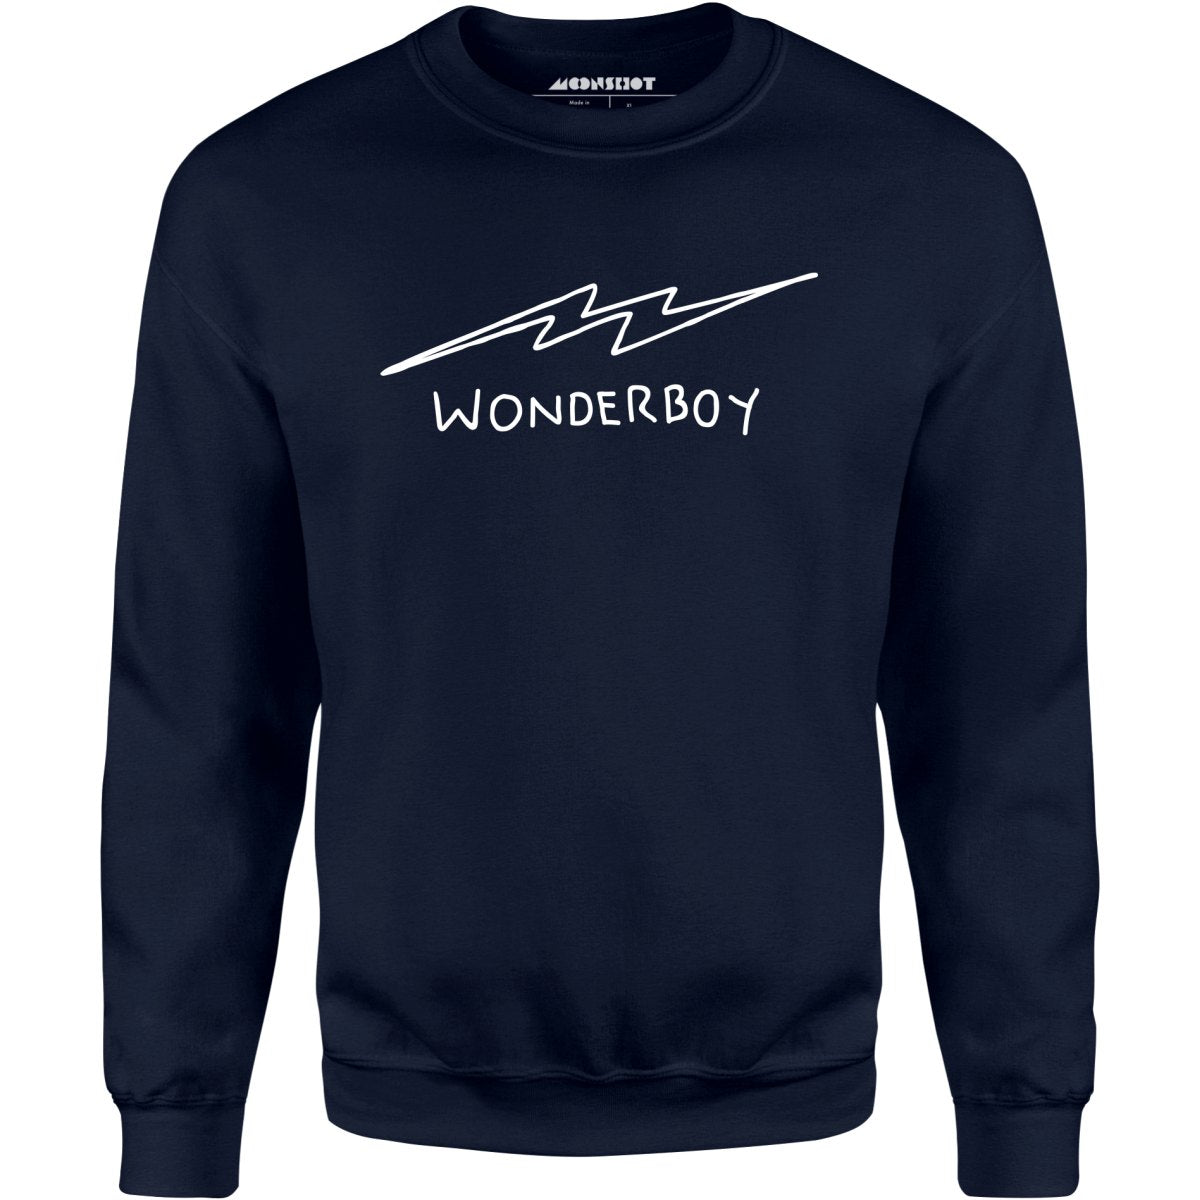 Roy Hobbs Wonderboy Bat - Unisex Sweatshirt